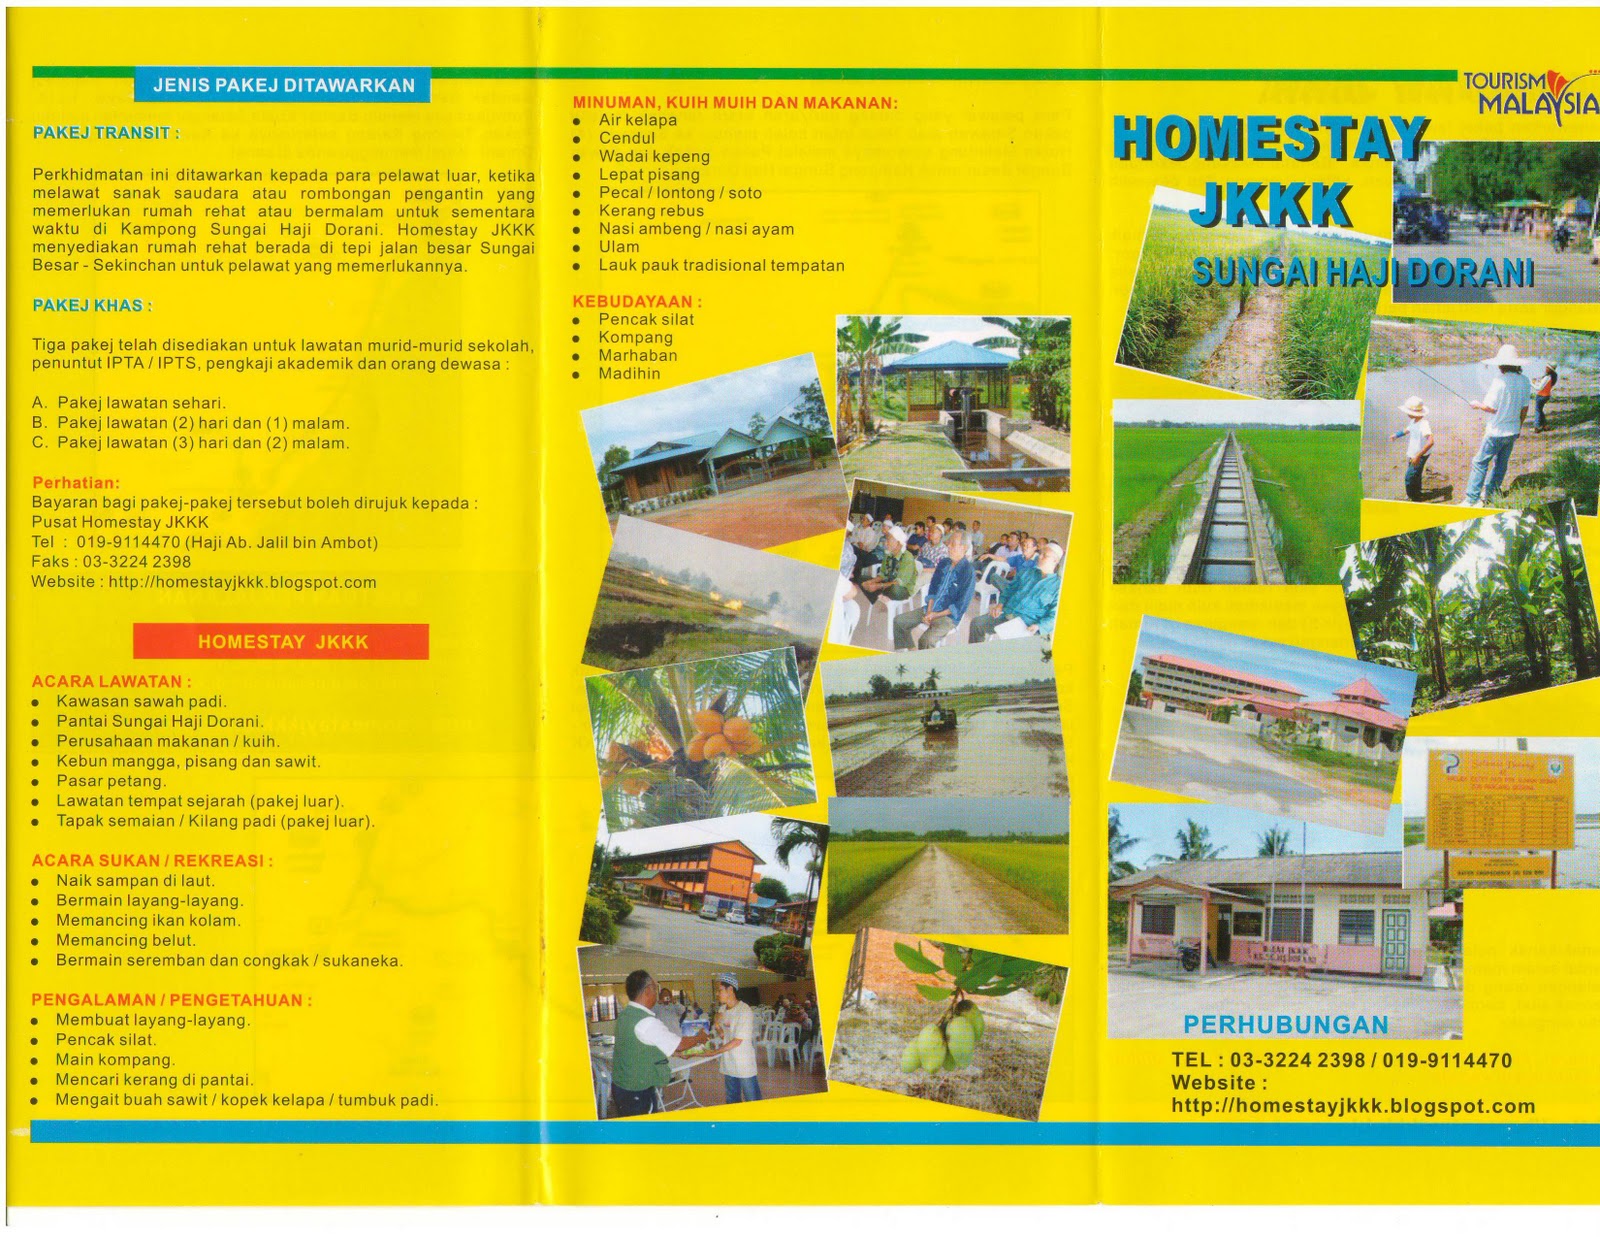 Homestay JKKK Sungai Haji Dorani : Pakej Tahun 2012